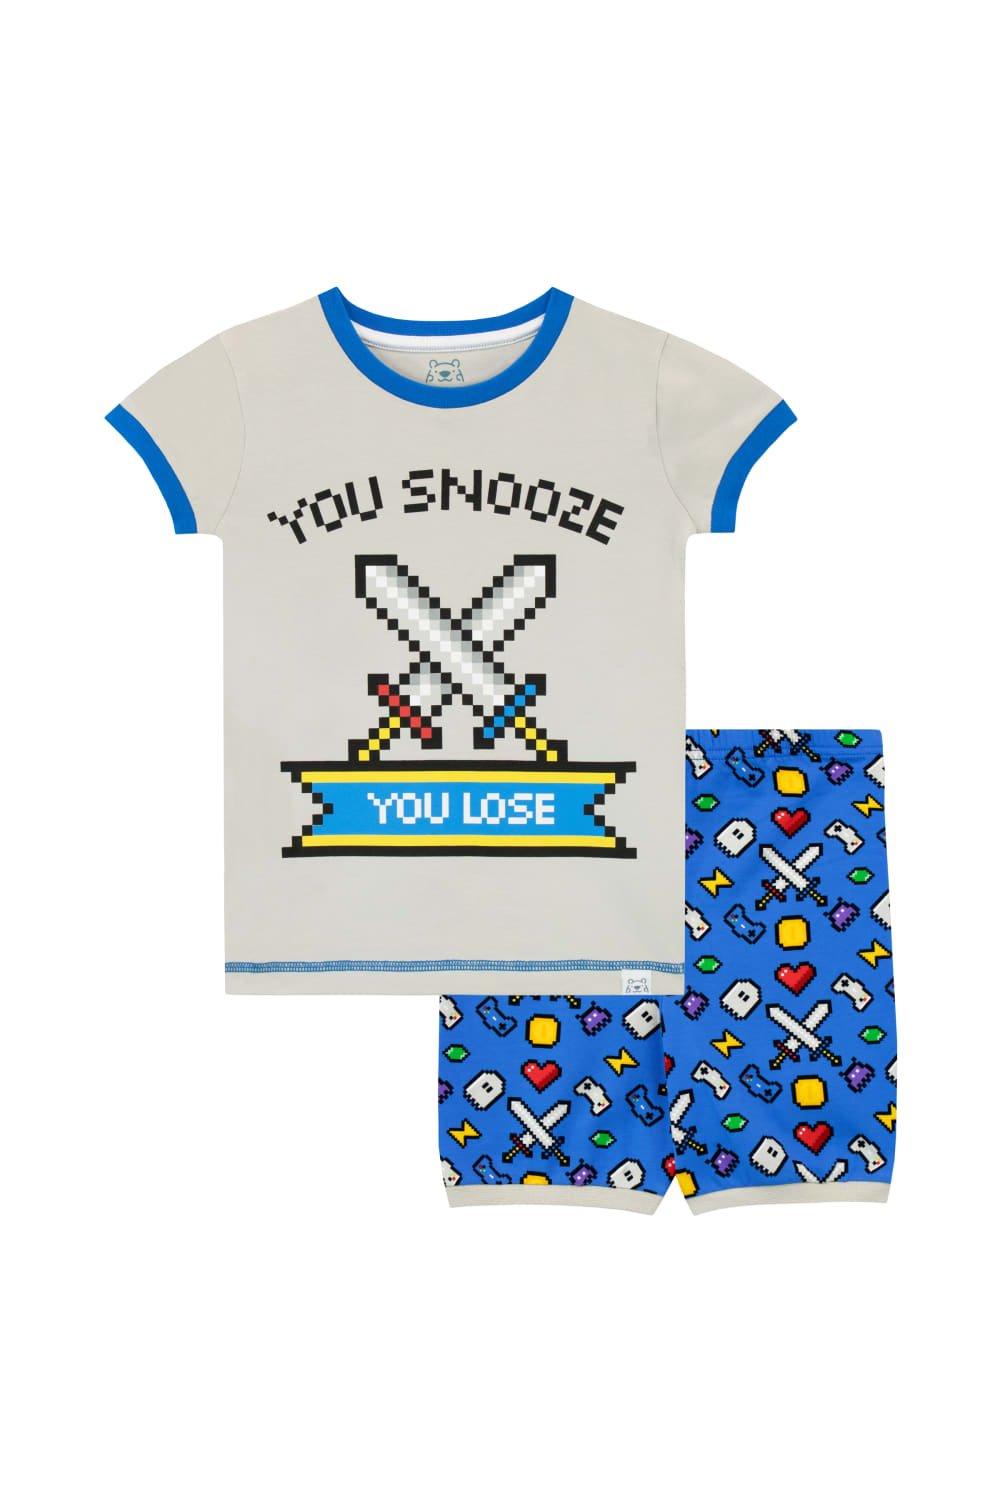 Snooze Lose Short Cosy Snuggle Fit Pyjamas